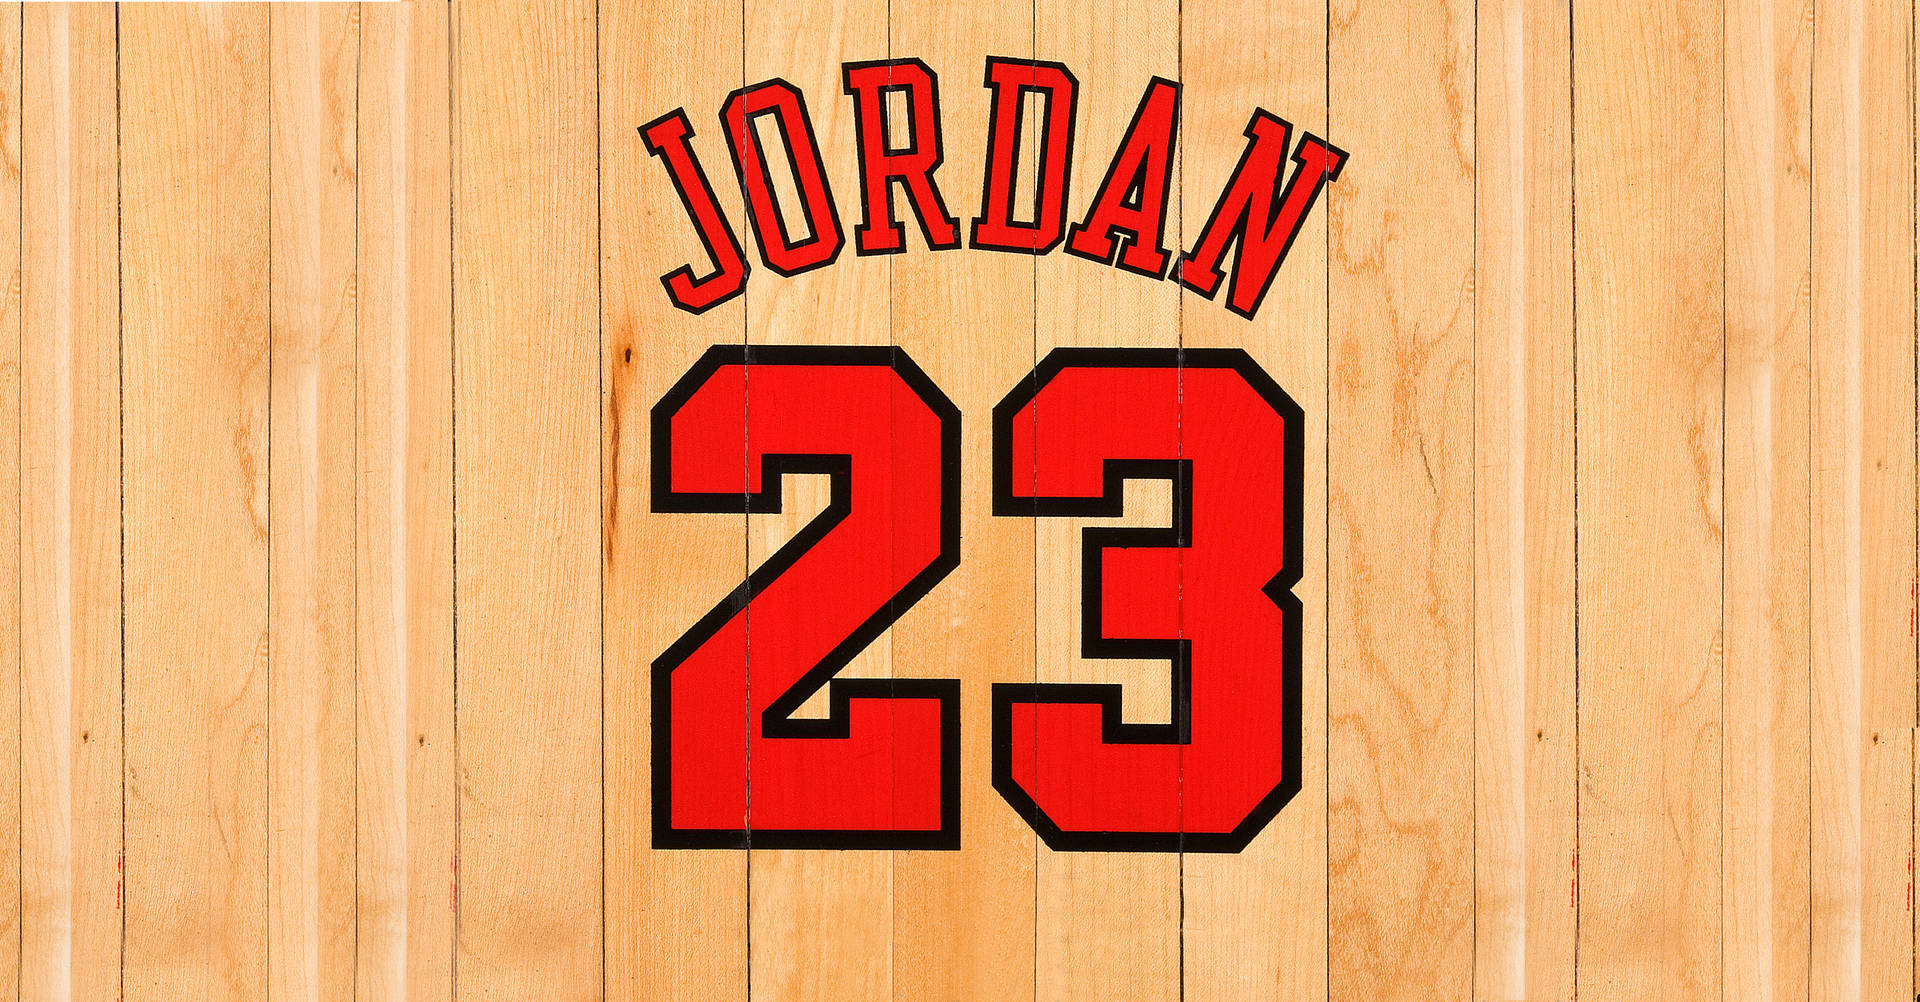 "Your Name - The Legendary Number 23, Michael Jordan" Wallpaper